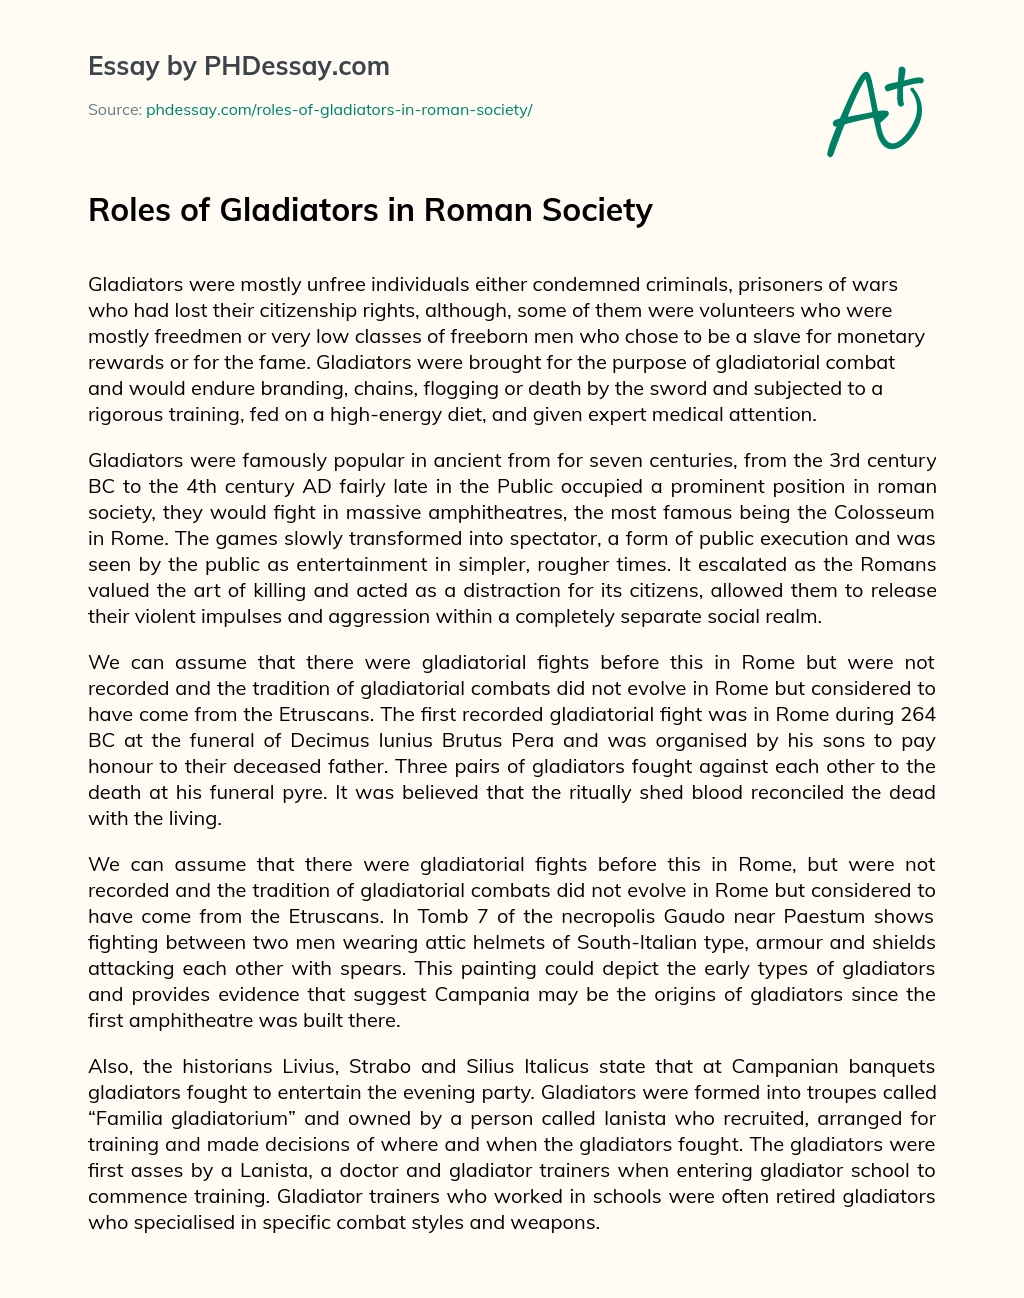 Roles of Gladiators in Roman Society essay